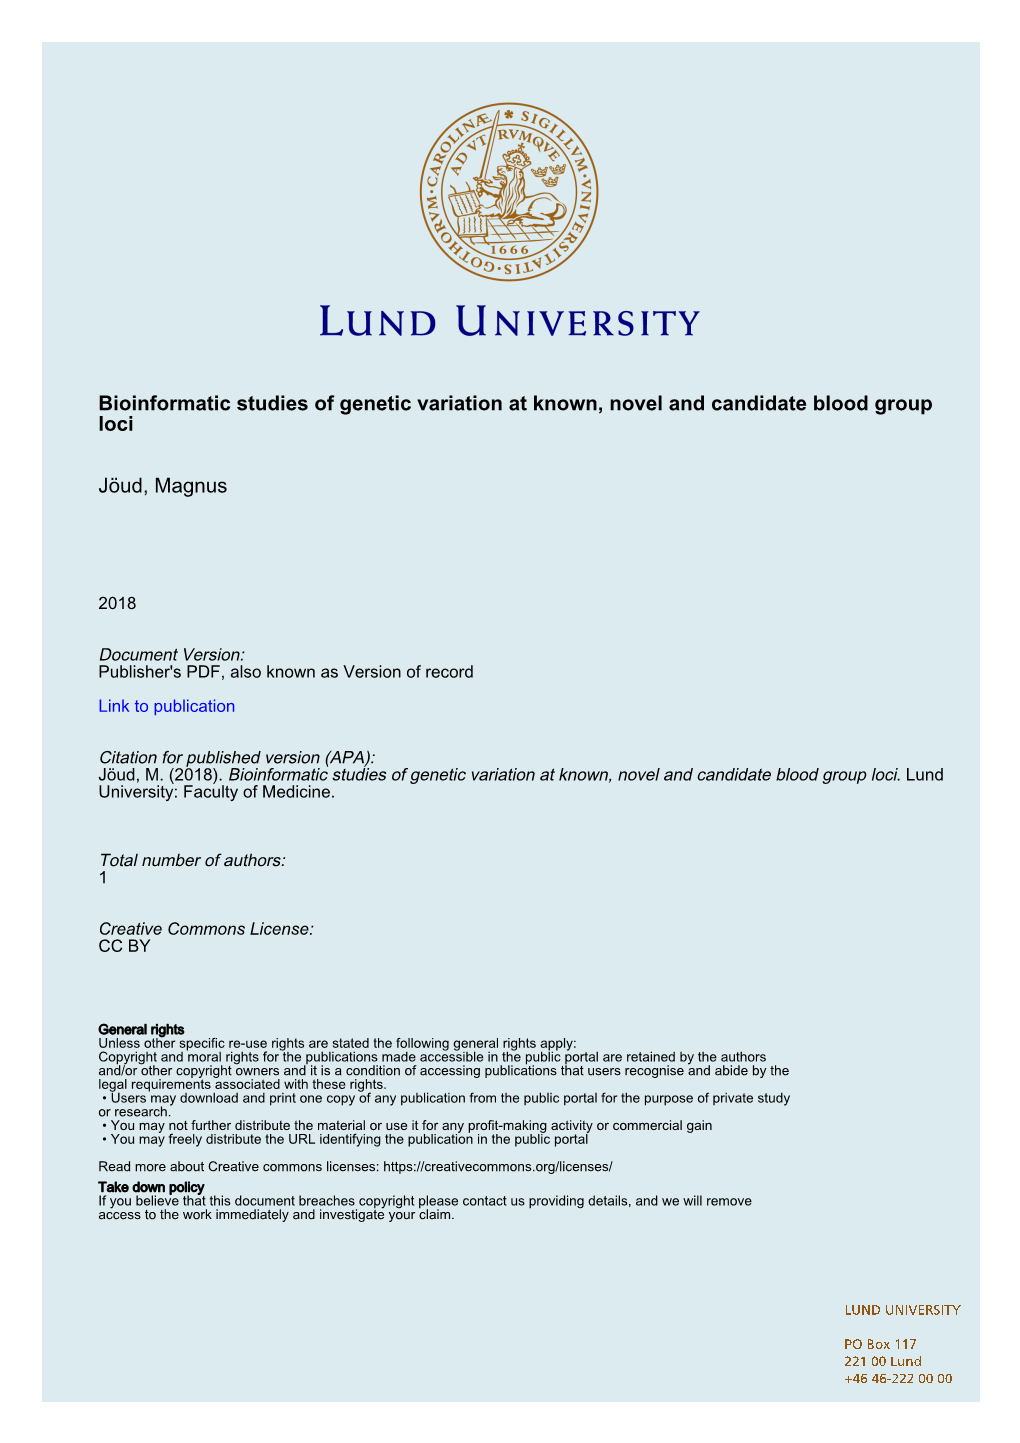 Bioinformatic Studies of Genetic Variation at Known, Novel and Candidate Blood Group Loci Jöud, Magnus